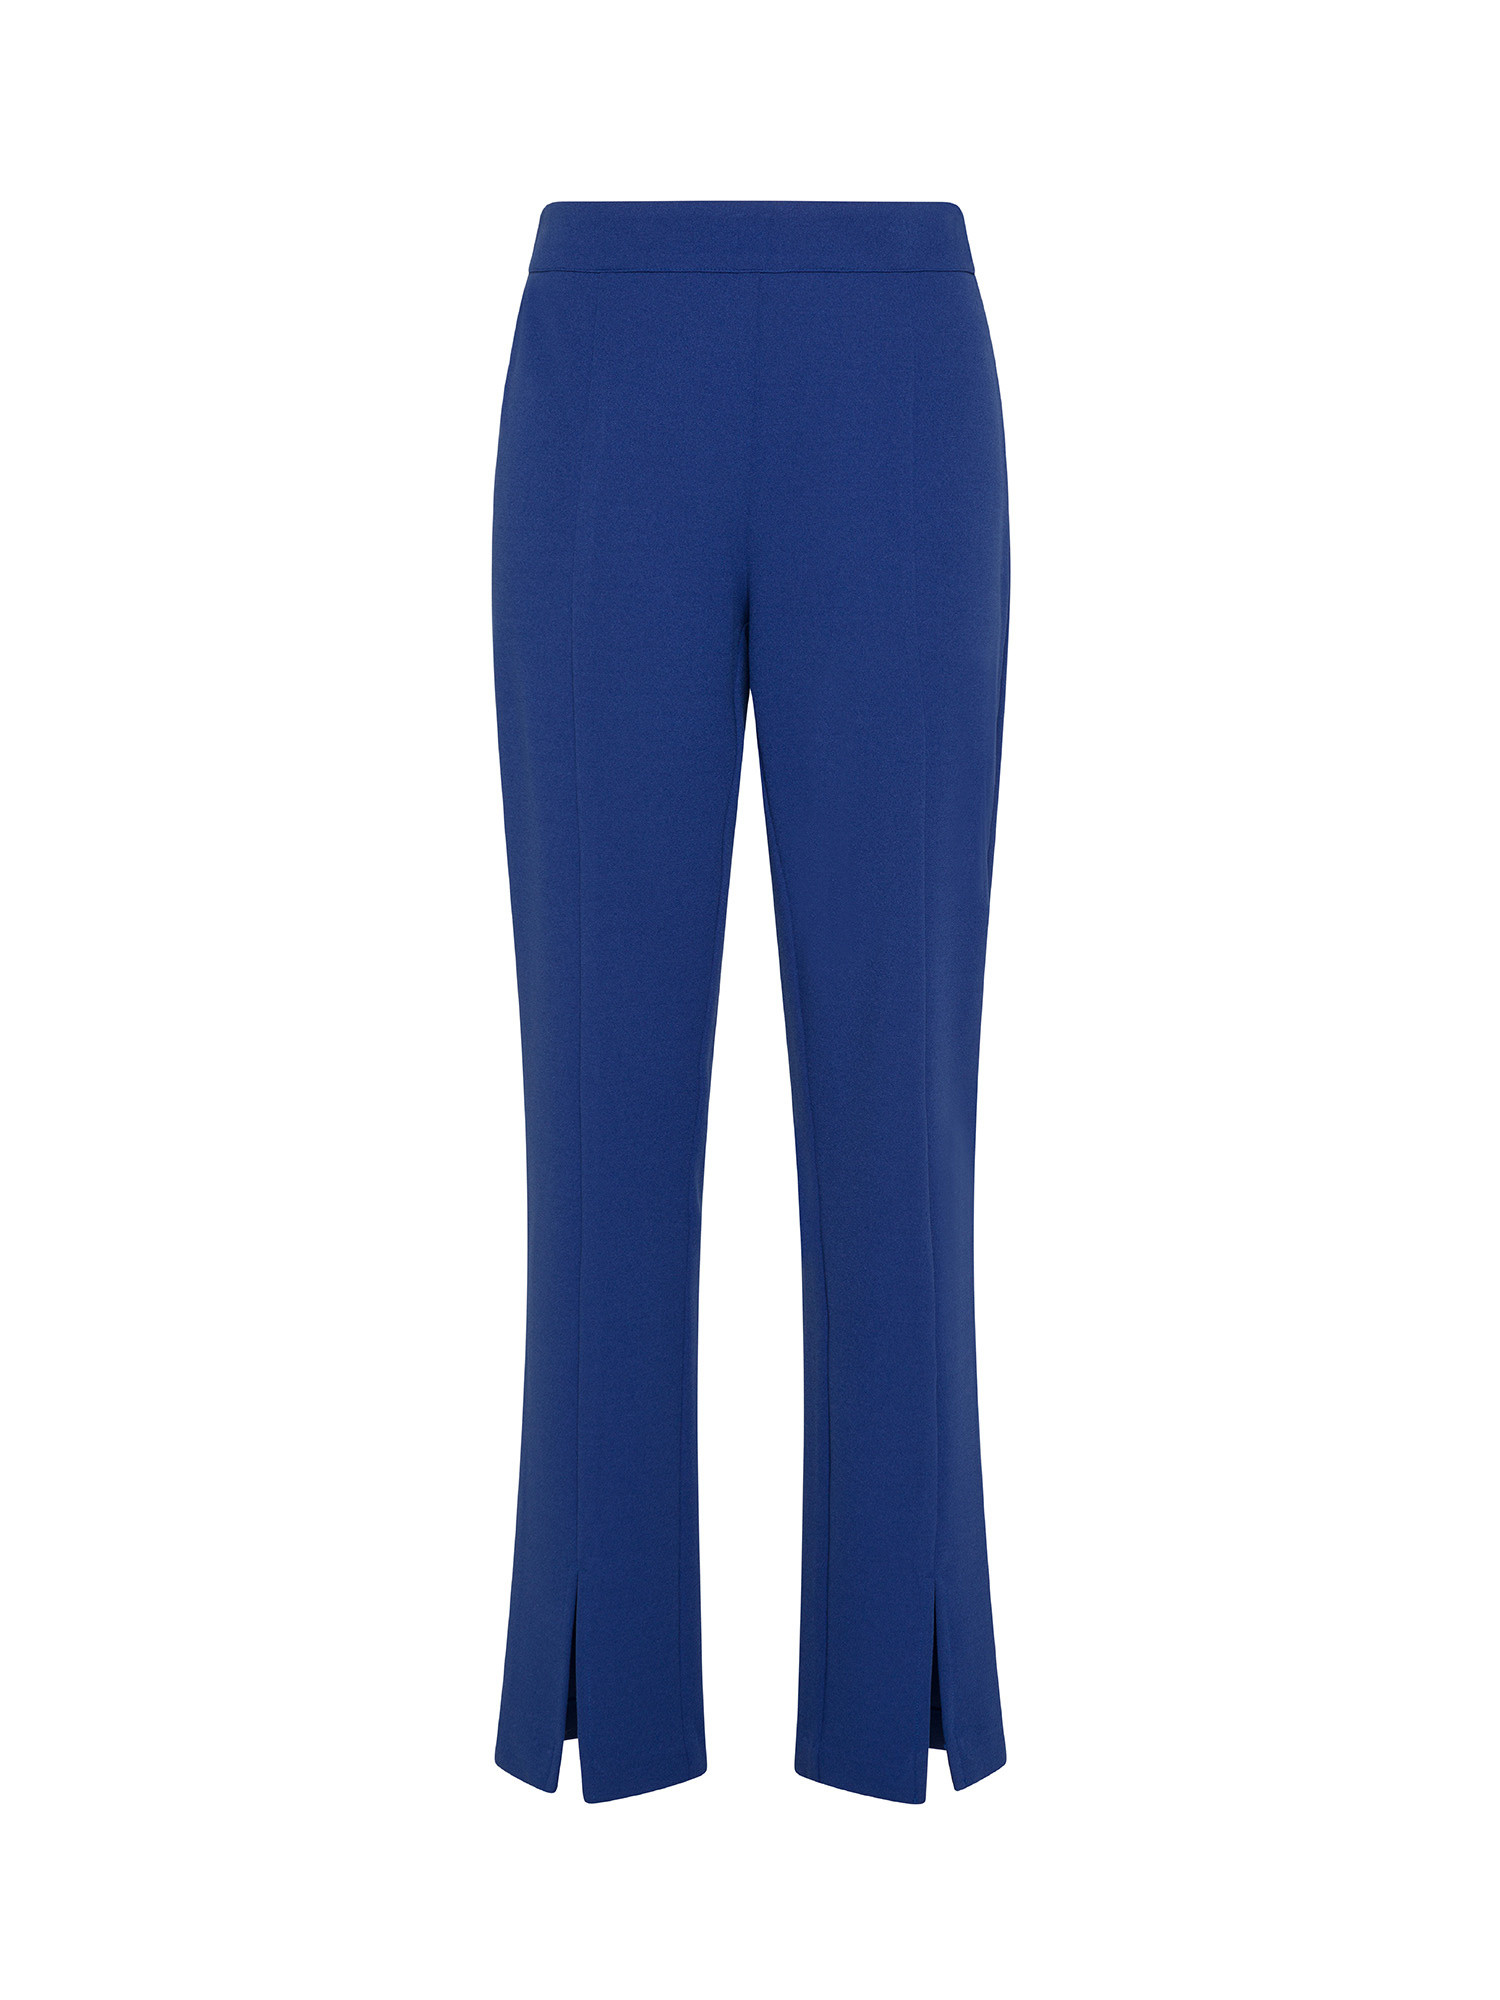 Koan - Pantaloni in crepe con spacchi, Blu royal, large image number 0